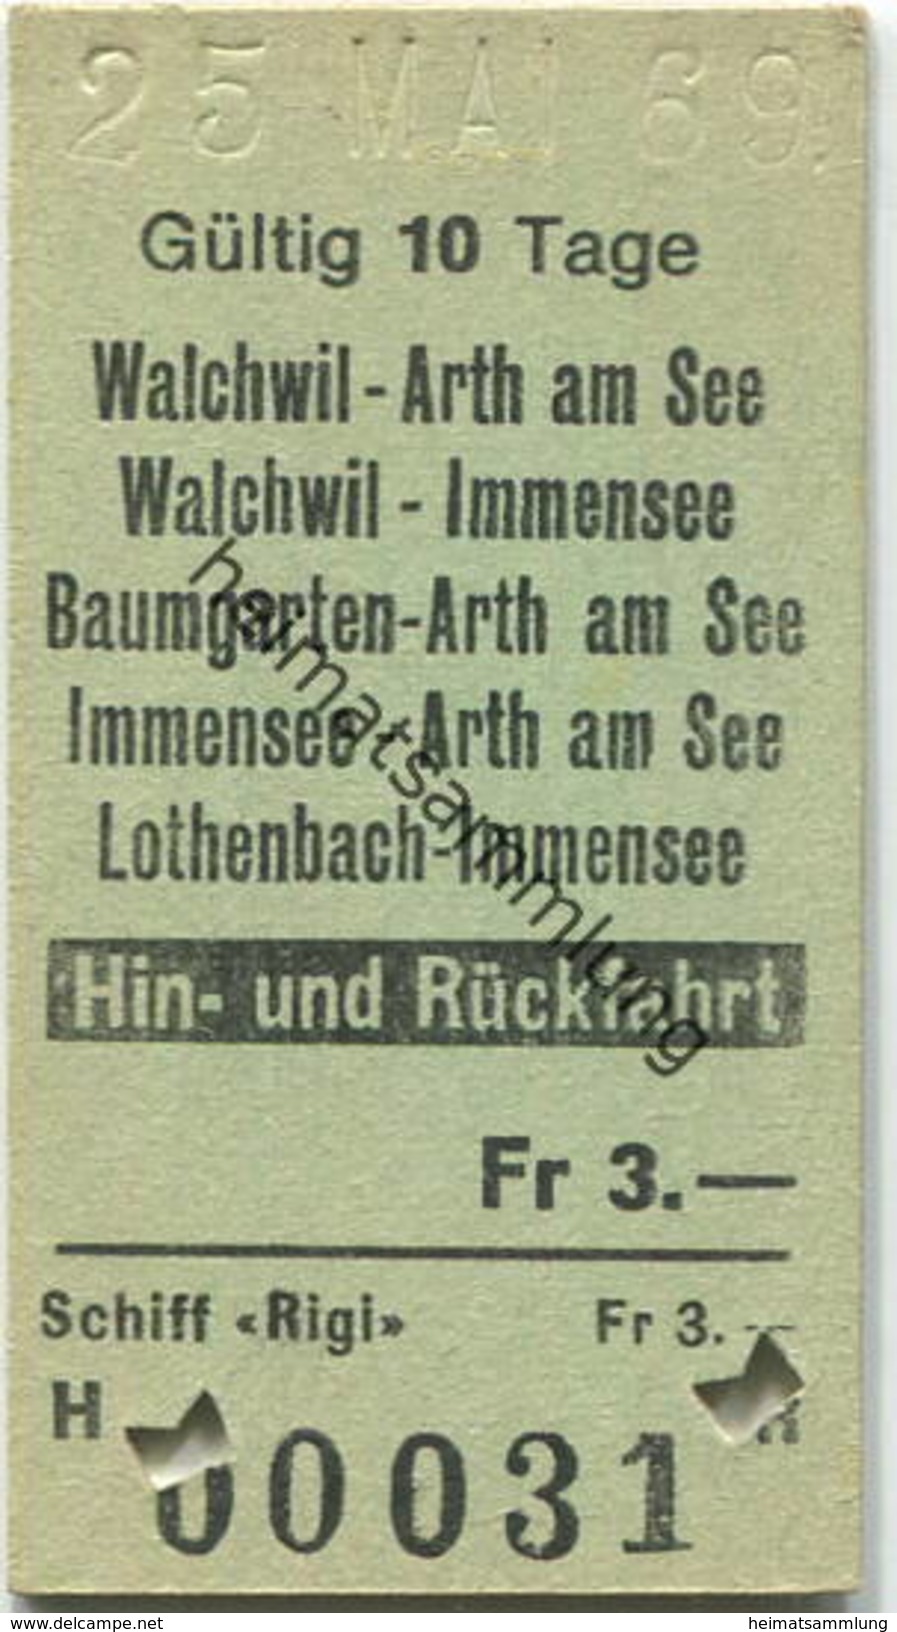 Schweiz - Schiff Rigi - Walchwil Lothenbach - Hin- Und Rückfahrt - Fahrkarte 1969 - Europa